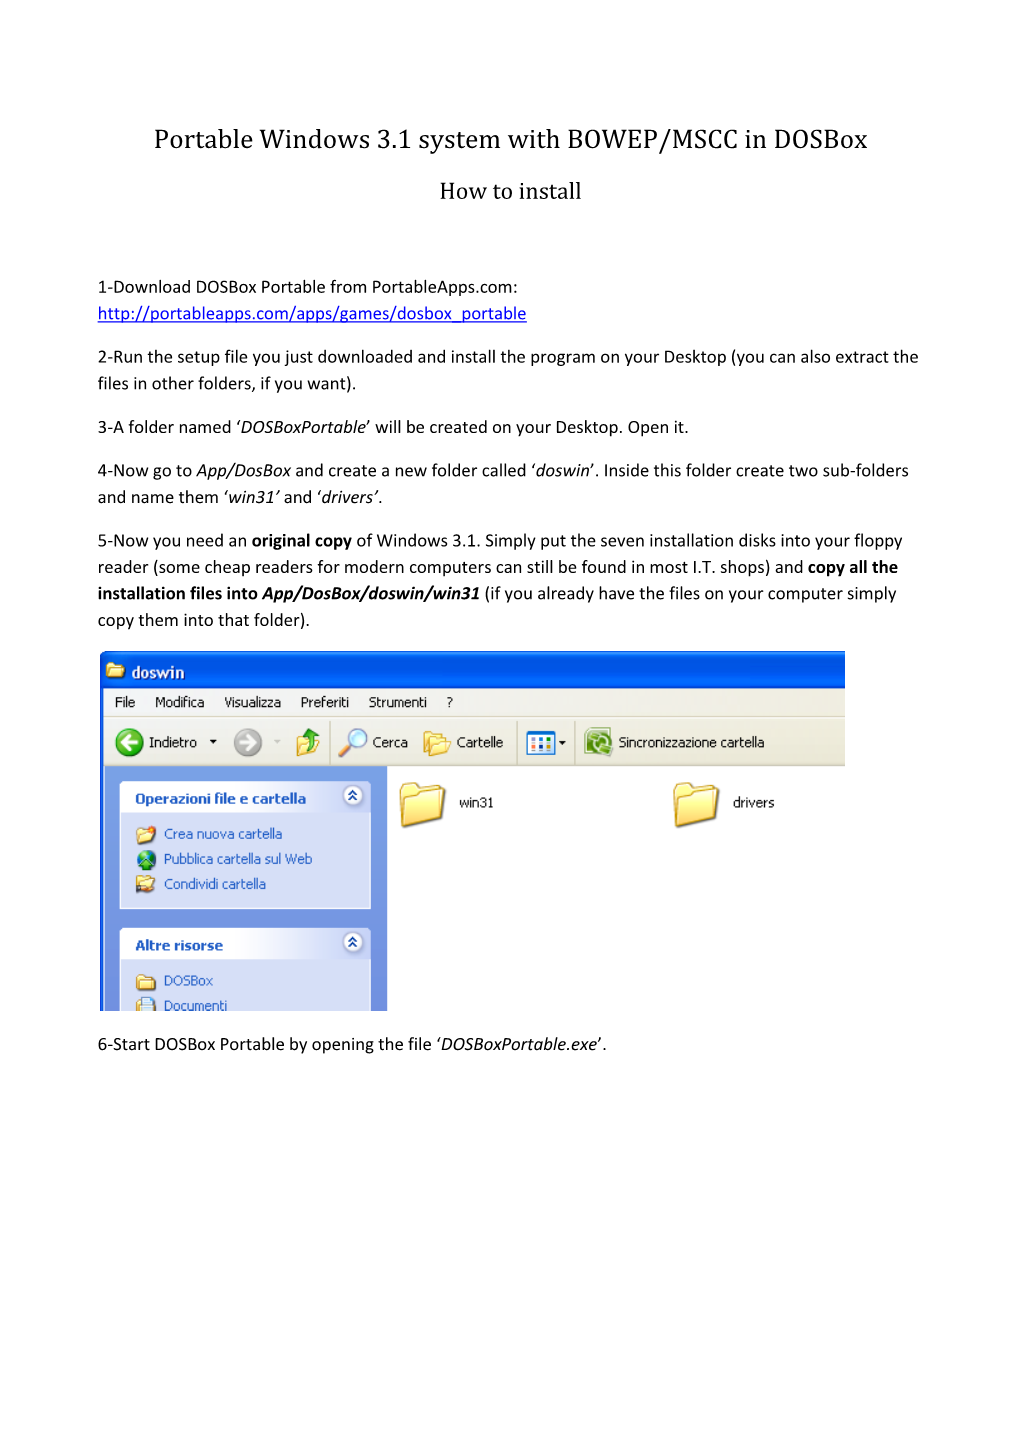 Portable Windows 3.1 System with BOWEP/MSCC in Dosbox